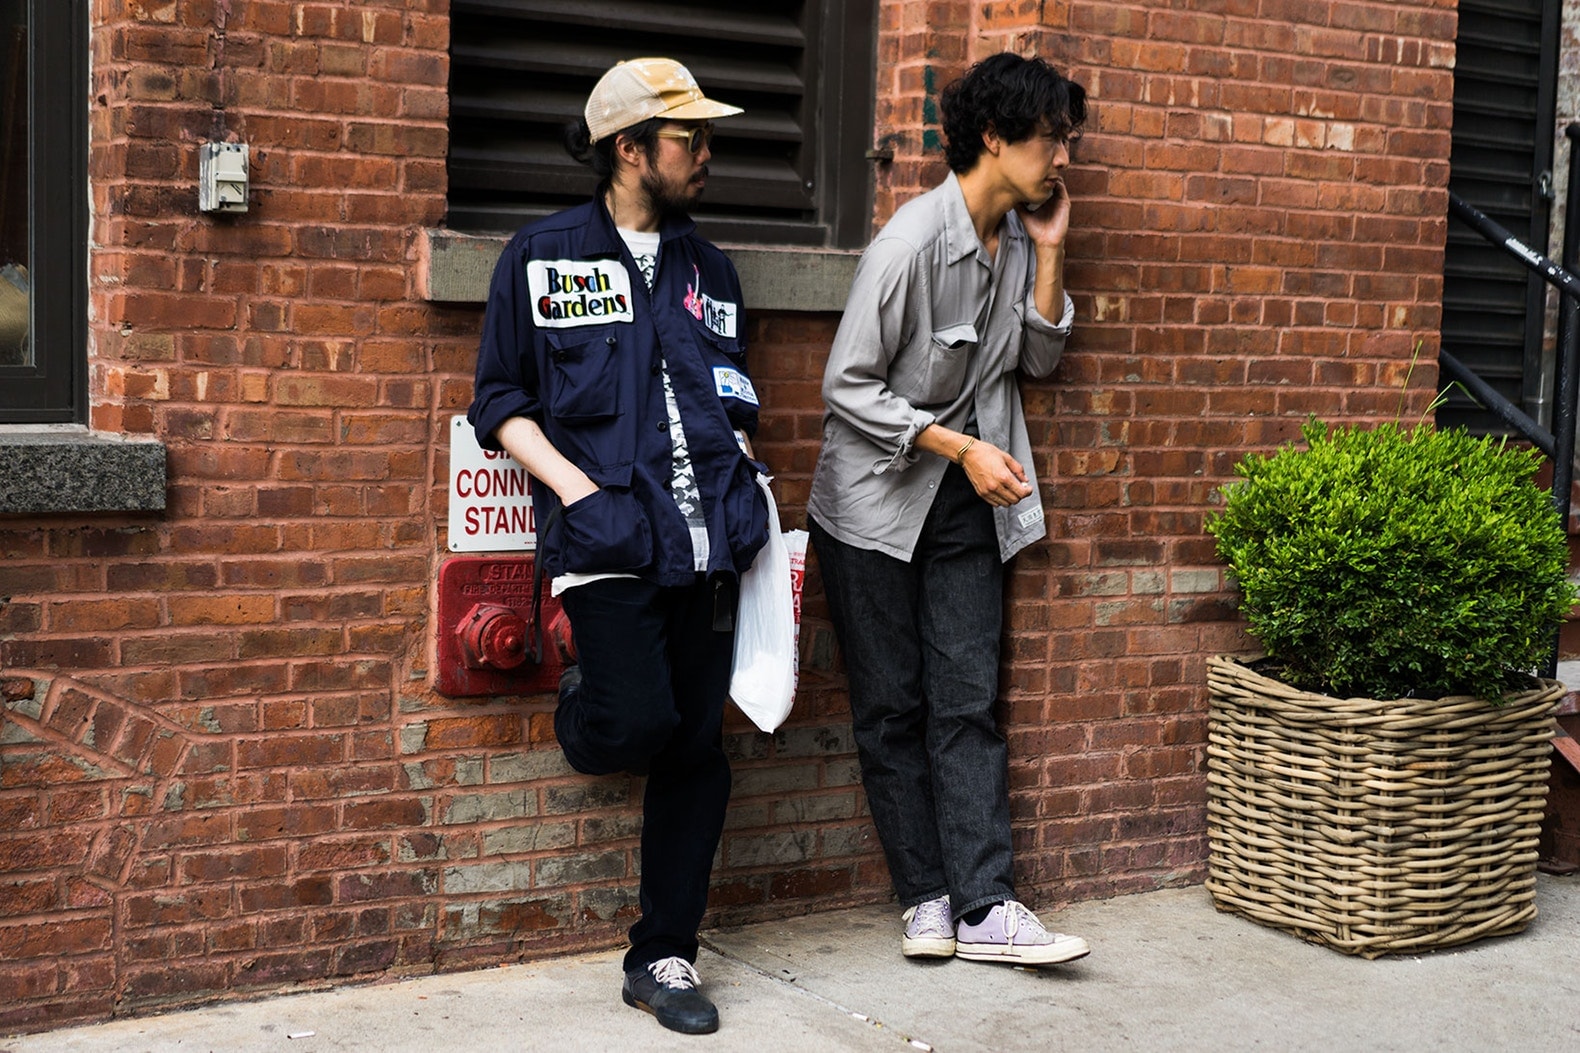 New York Fashion Week: Men's Street Style Day 2